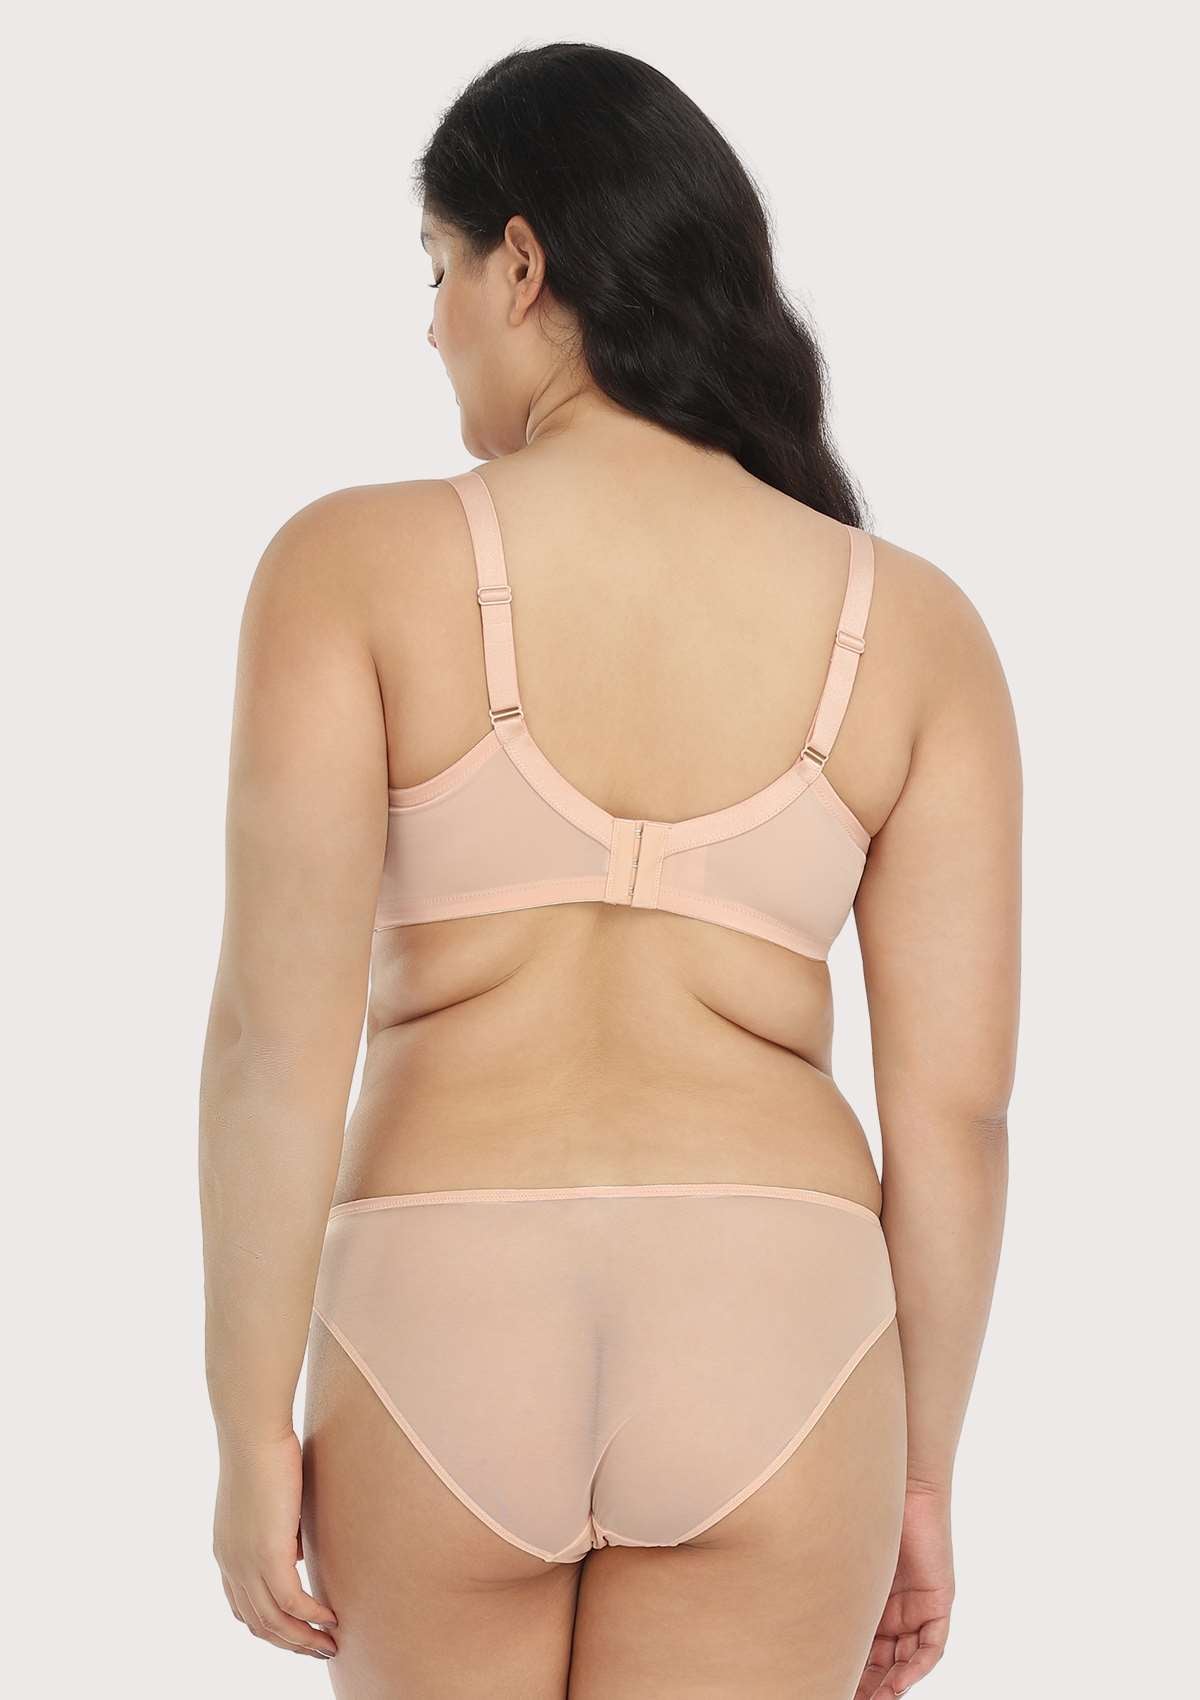 HSIA Sunflower Matching Bra And Panties Set: Comfortable Plus Size Bra - Pink / 42 / D